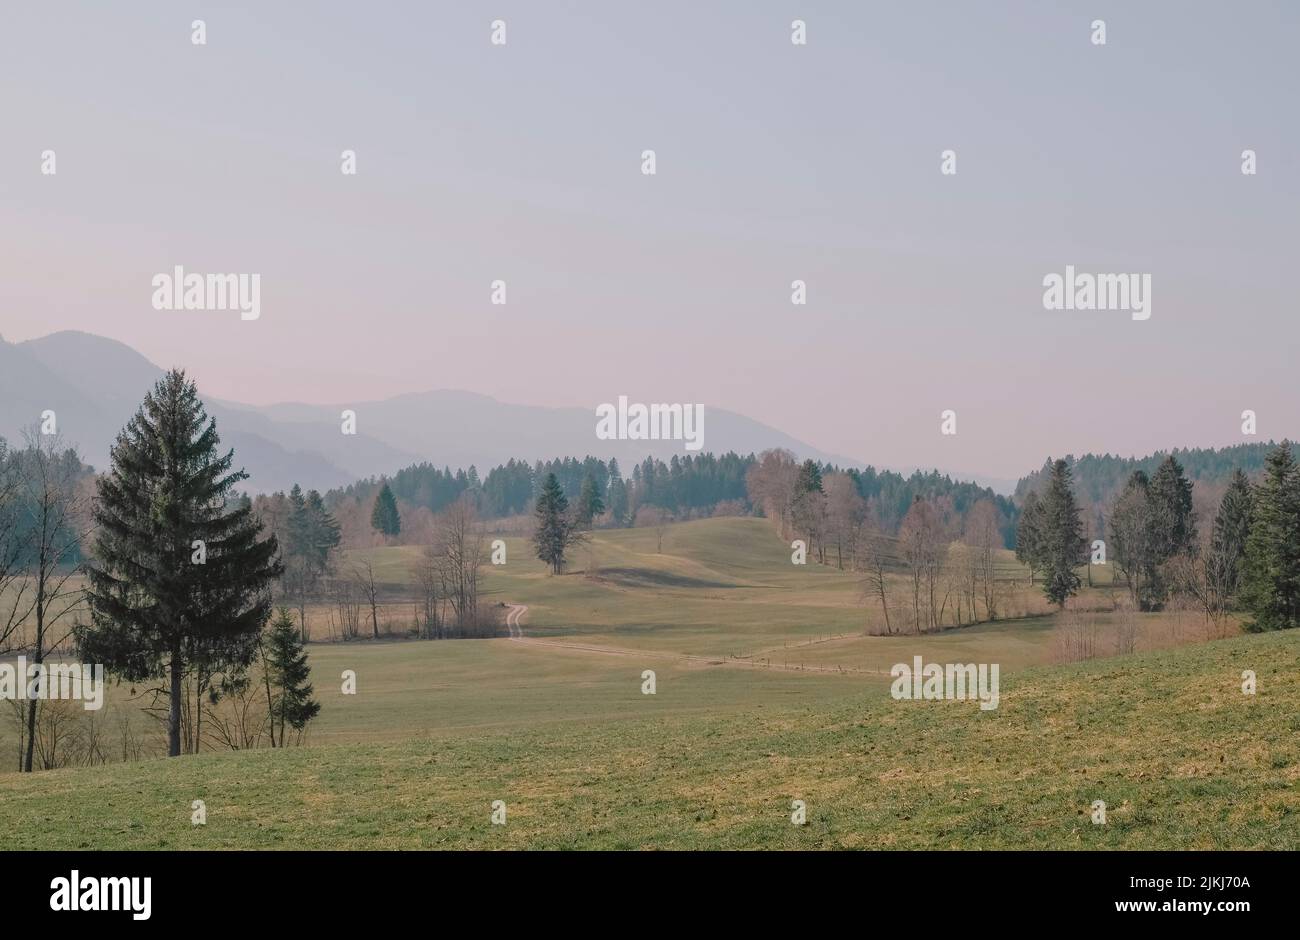 Germany, Bavaria, landscape, meadow, fields, trees Stock Photo